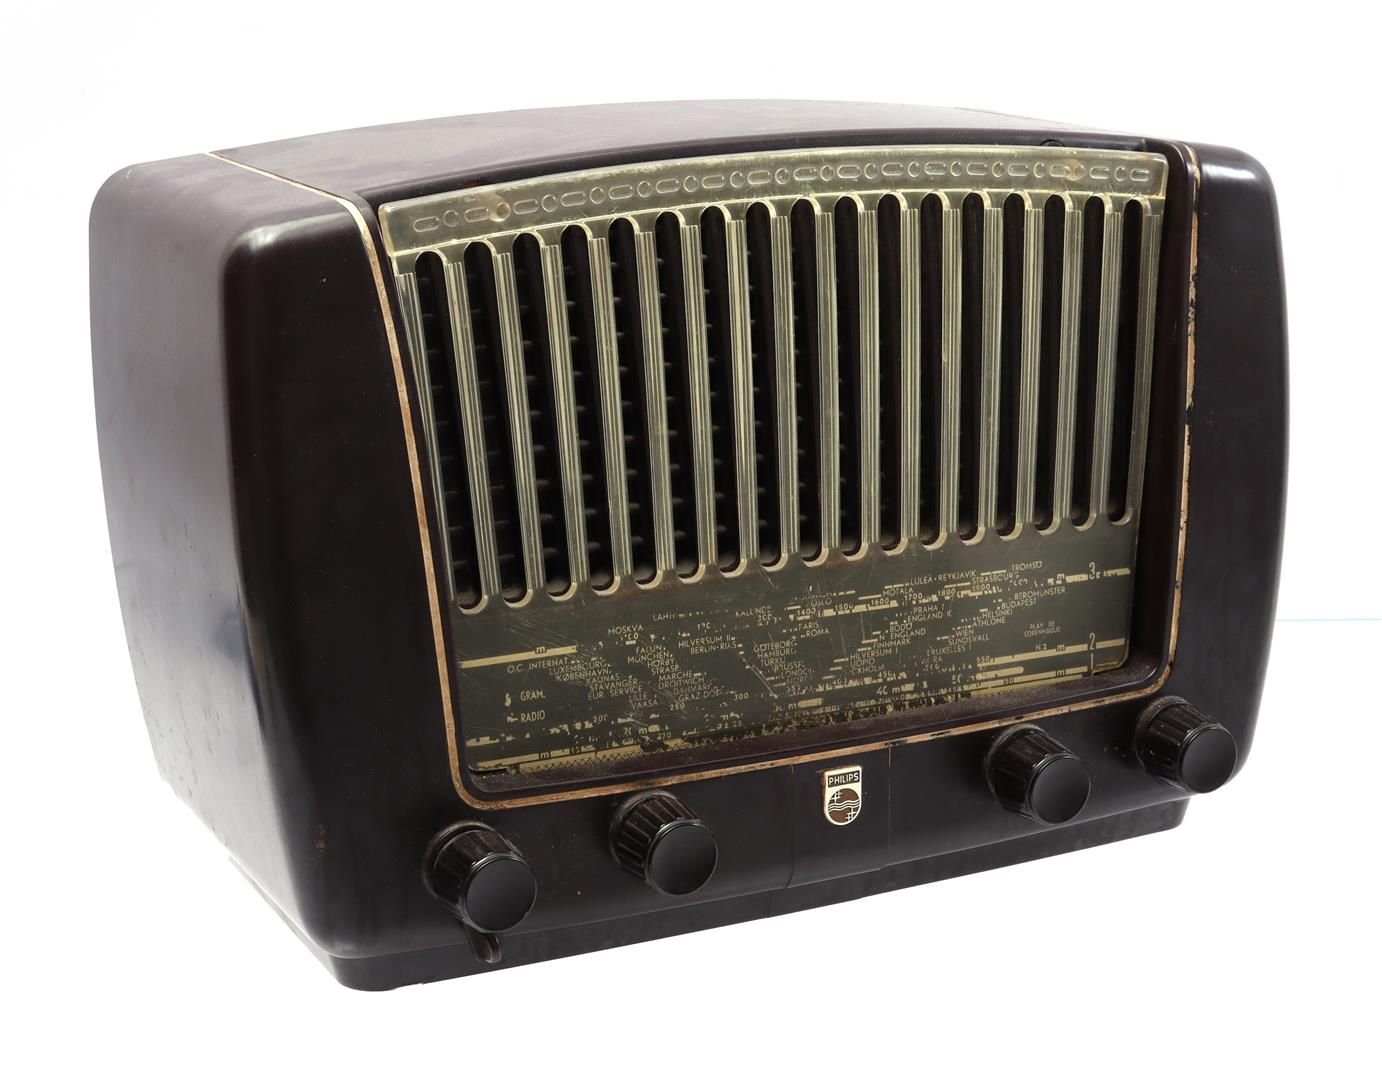 Philips BX310 bakelite radio Philips BX310 radio in bachelite, larghezza 37 cm